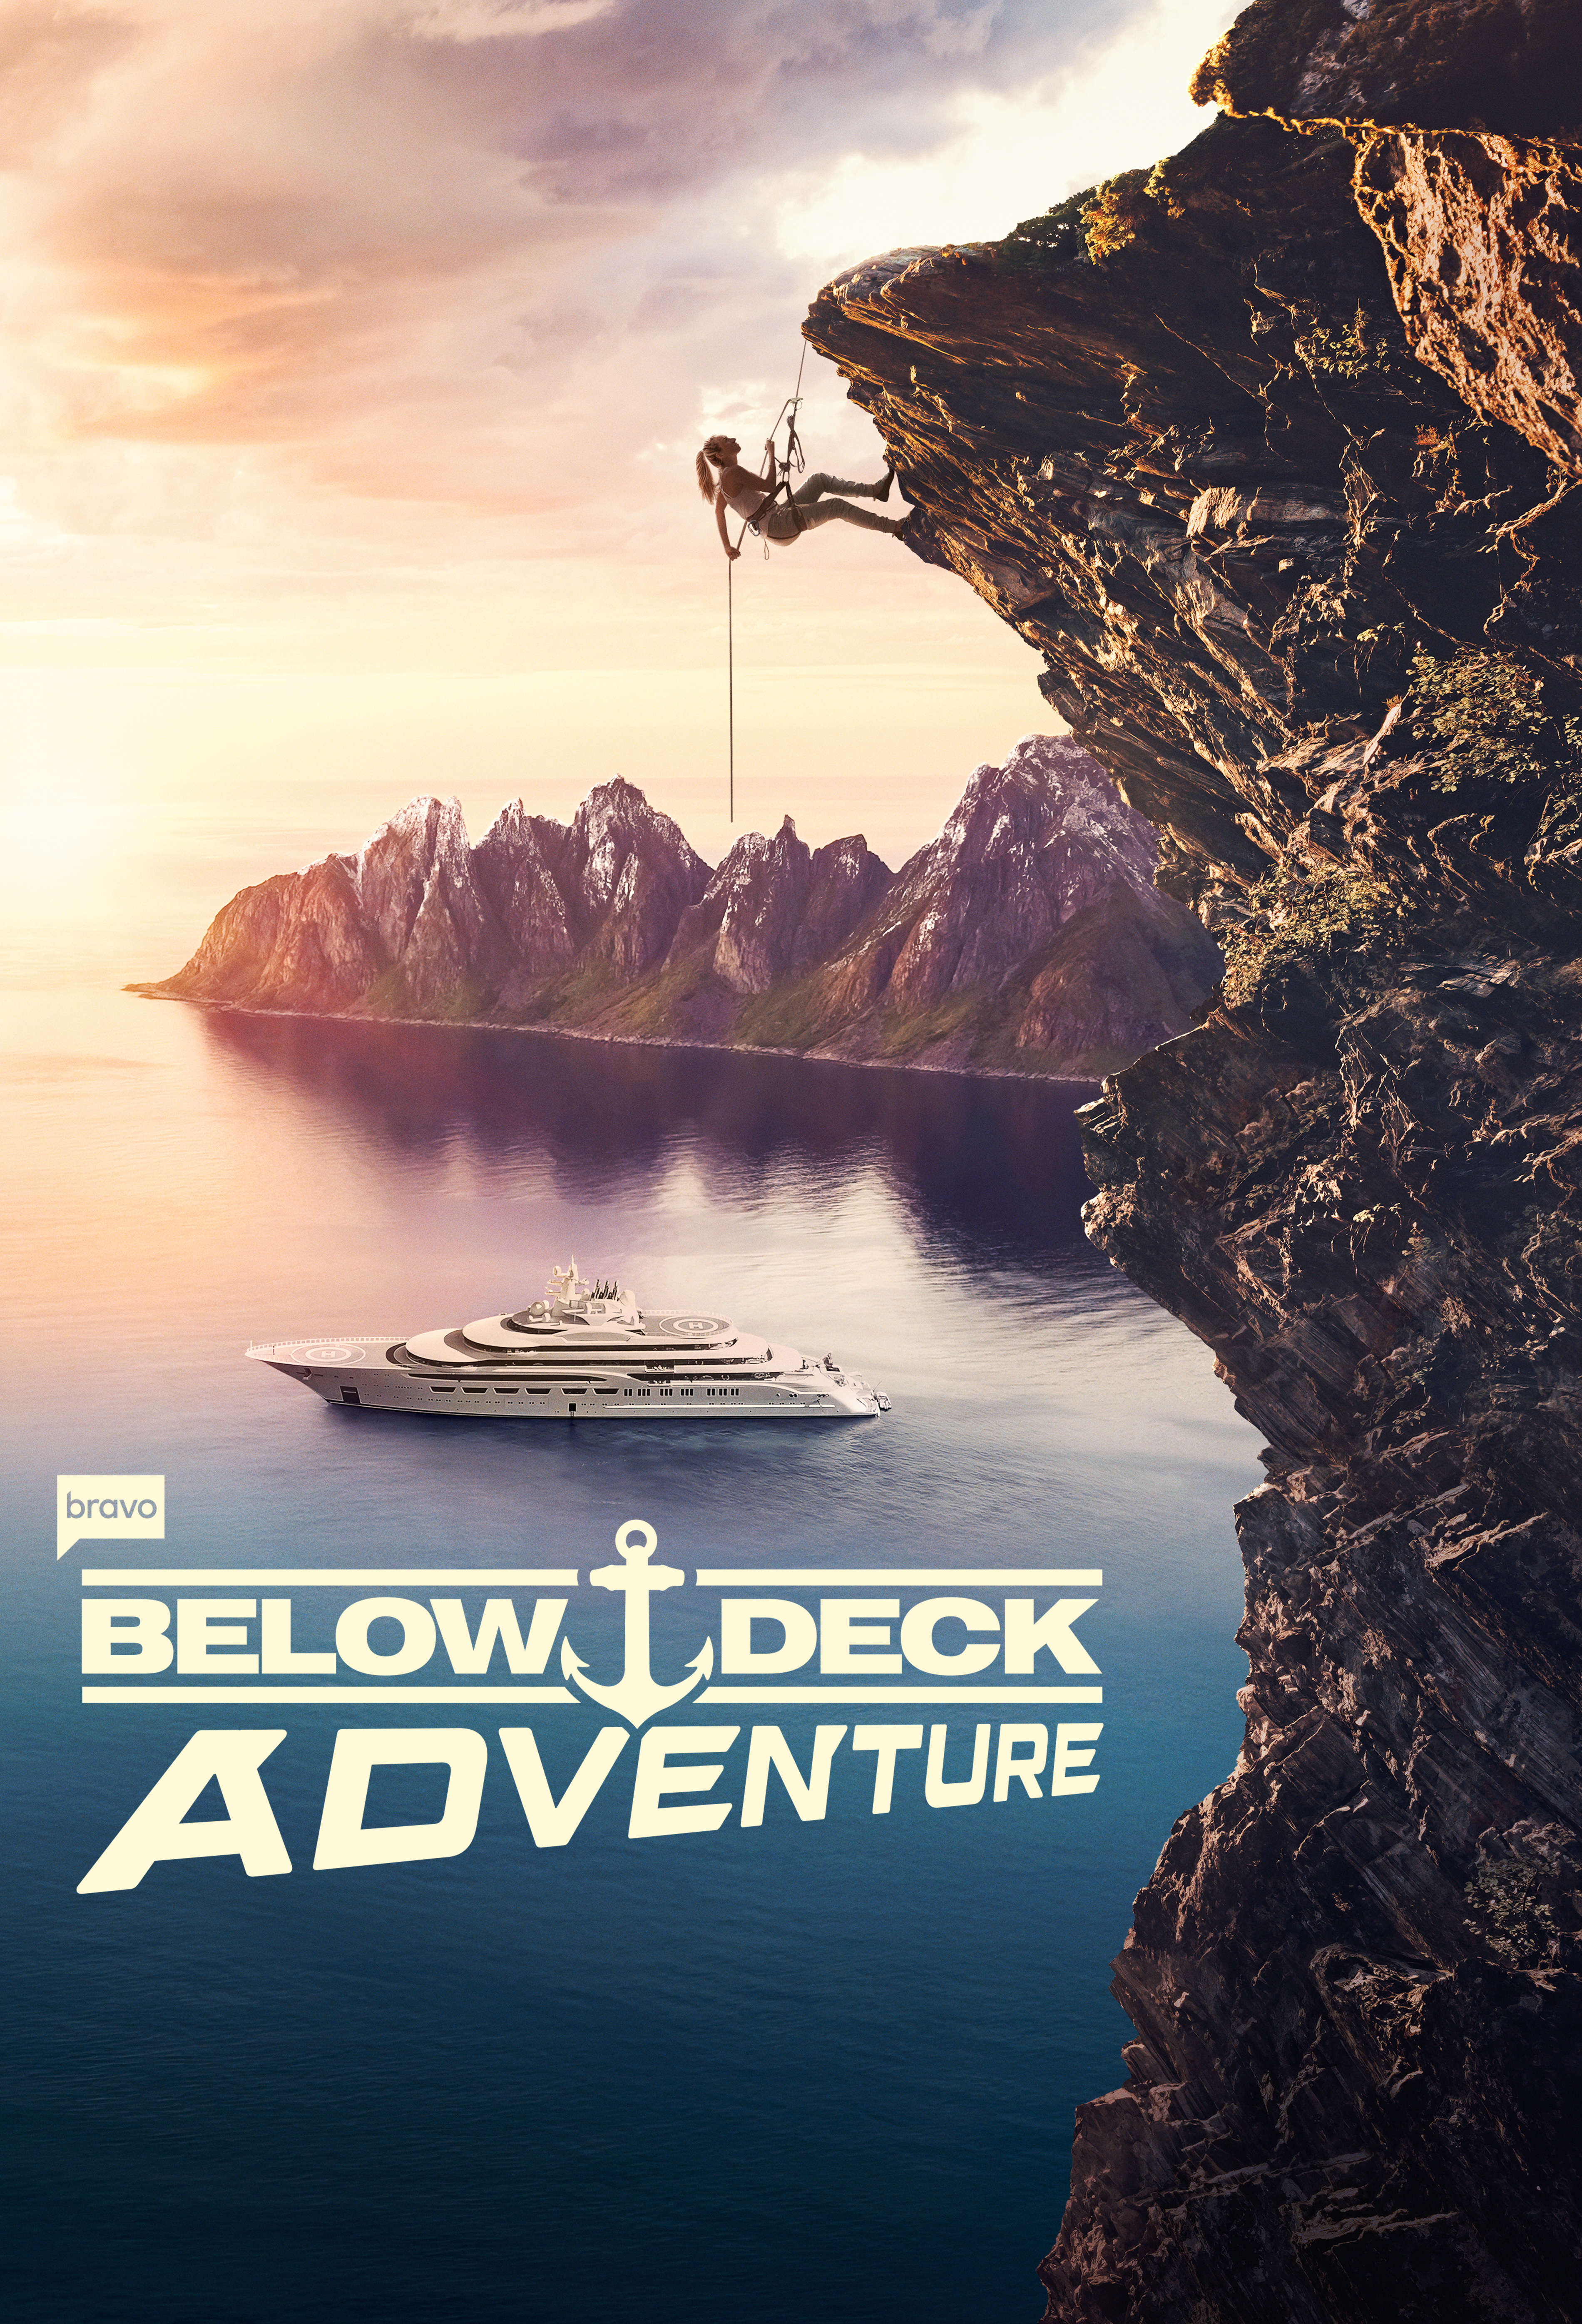 Below Deck Adventure Season 1 Episode 2